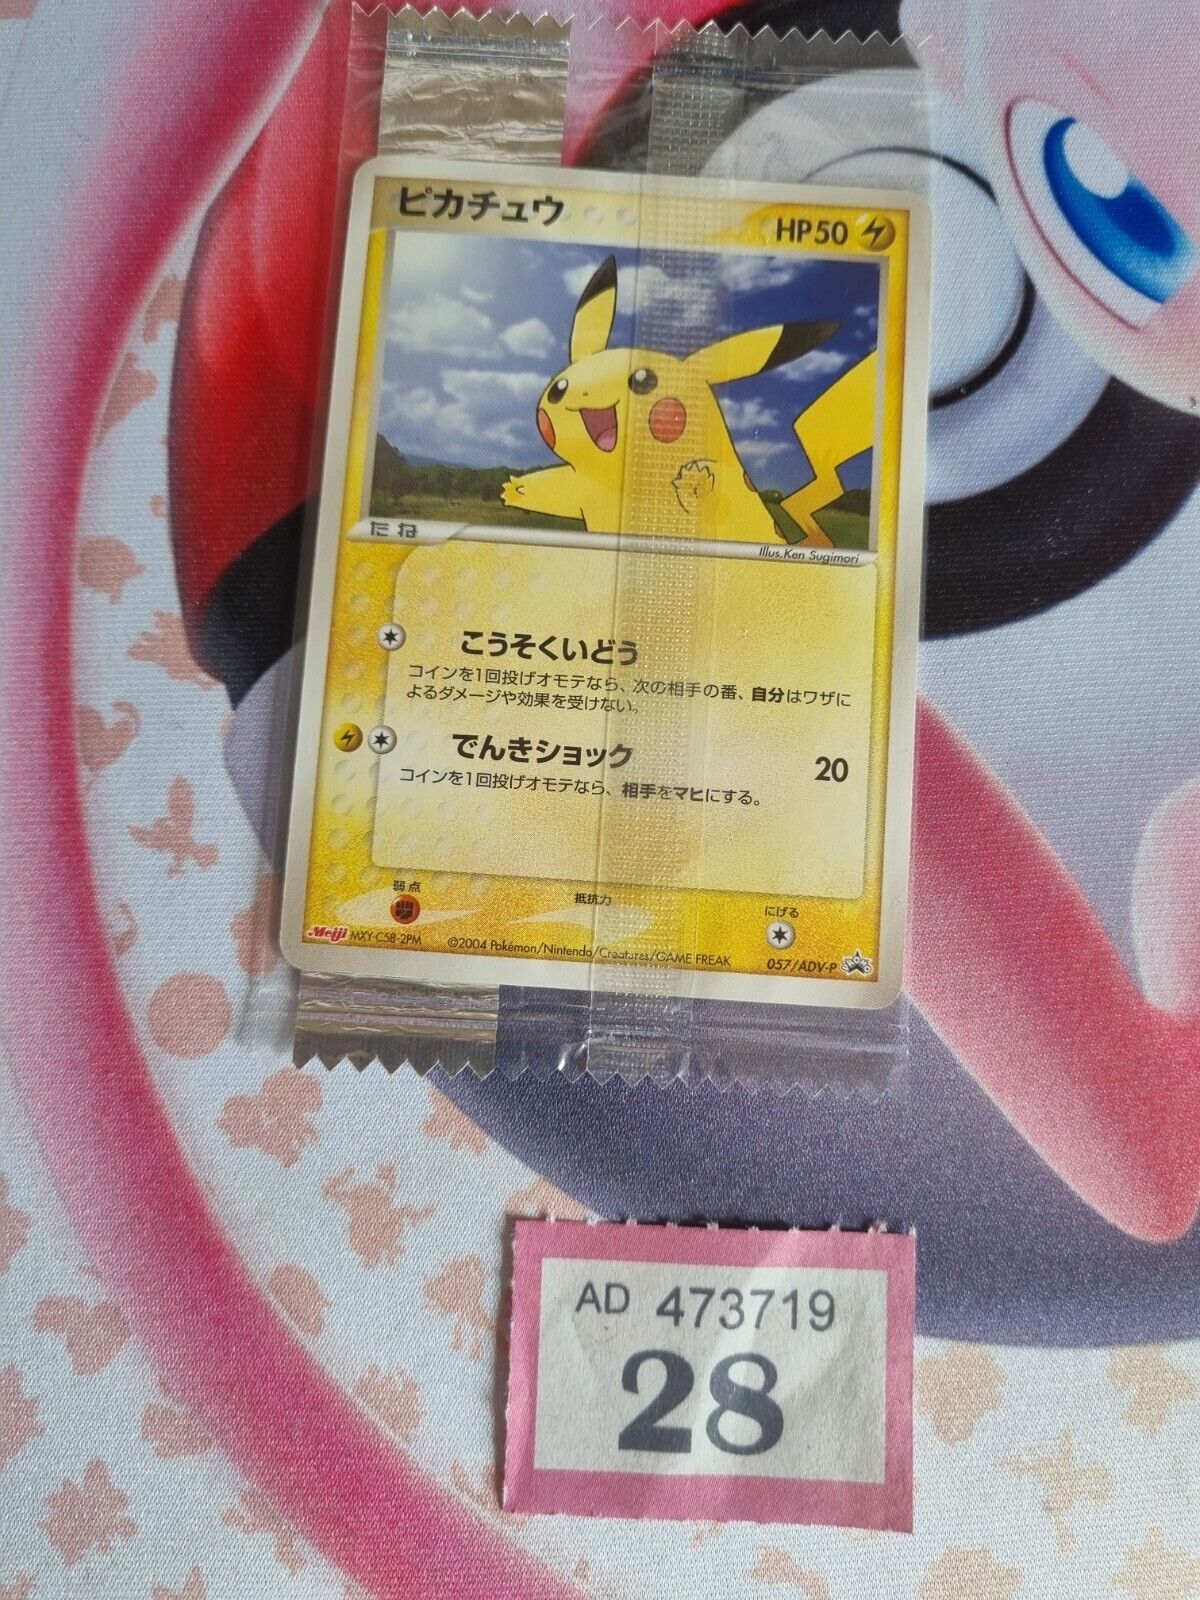 Pokemon TCG 2005 japanese Promo Card 057/ADV-P Meiji Chocolate Pikachu sealed